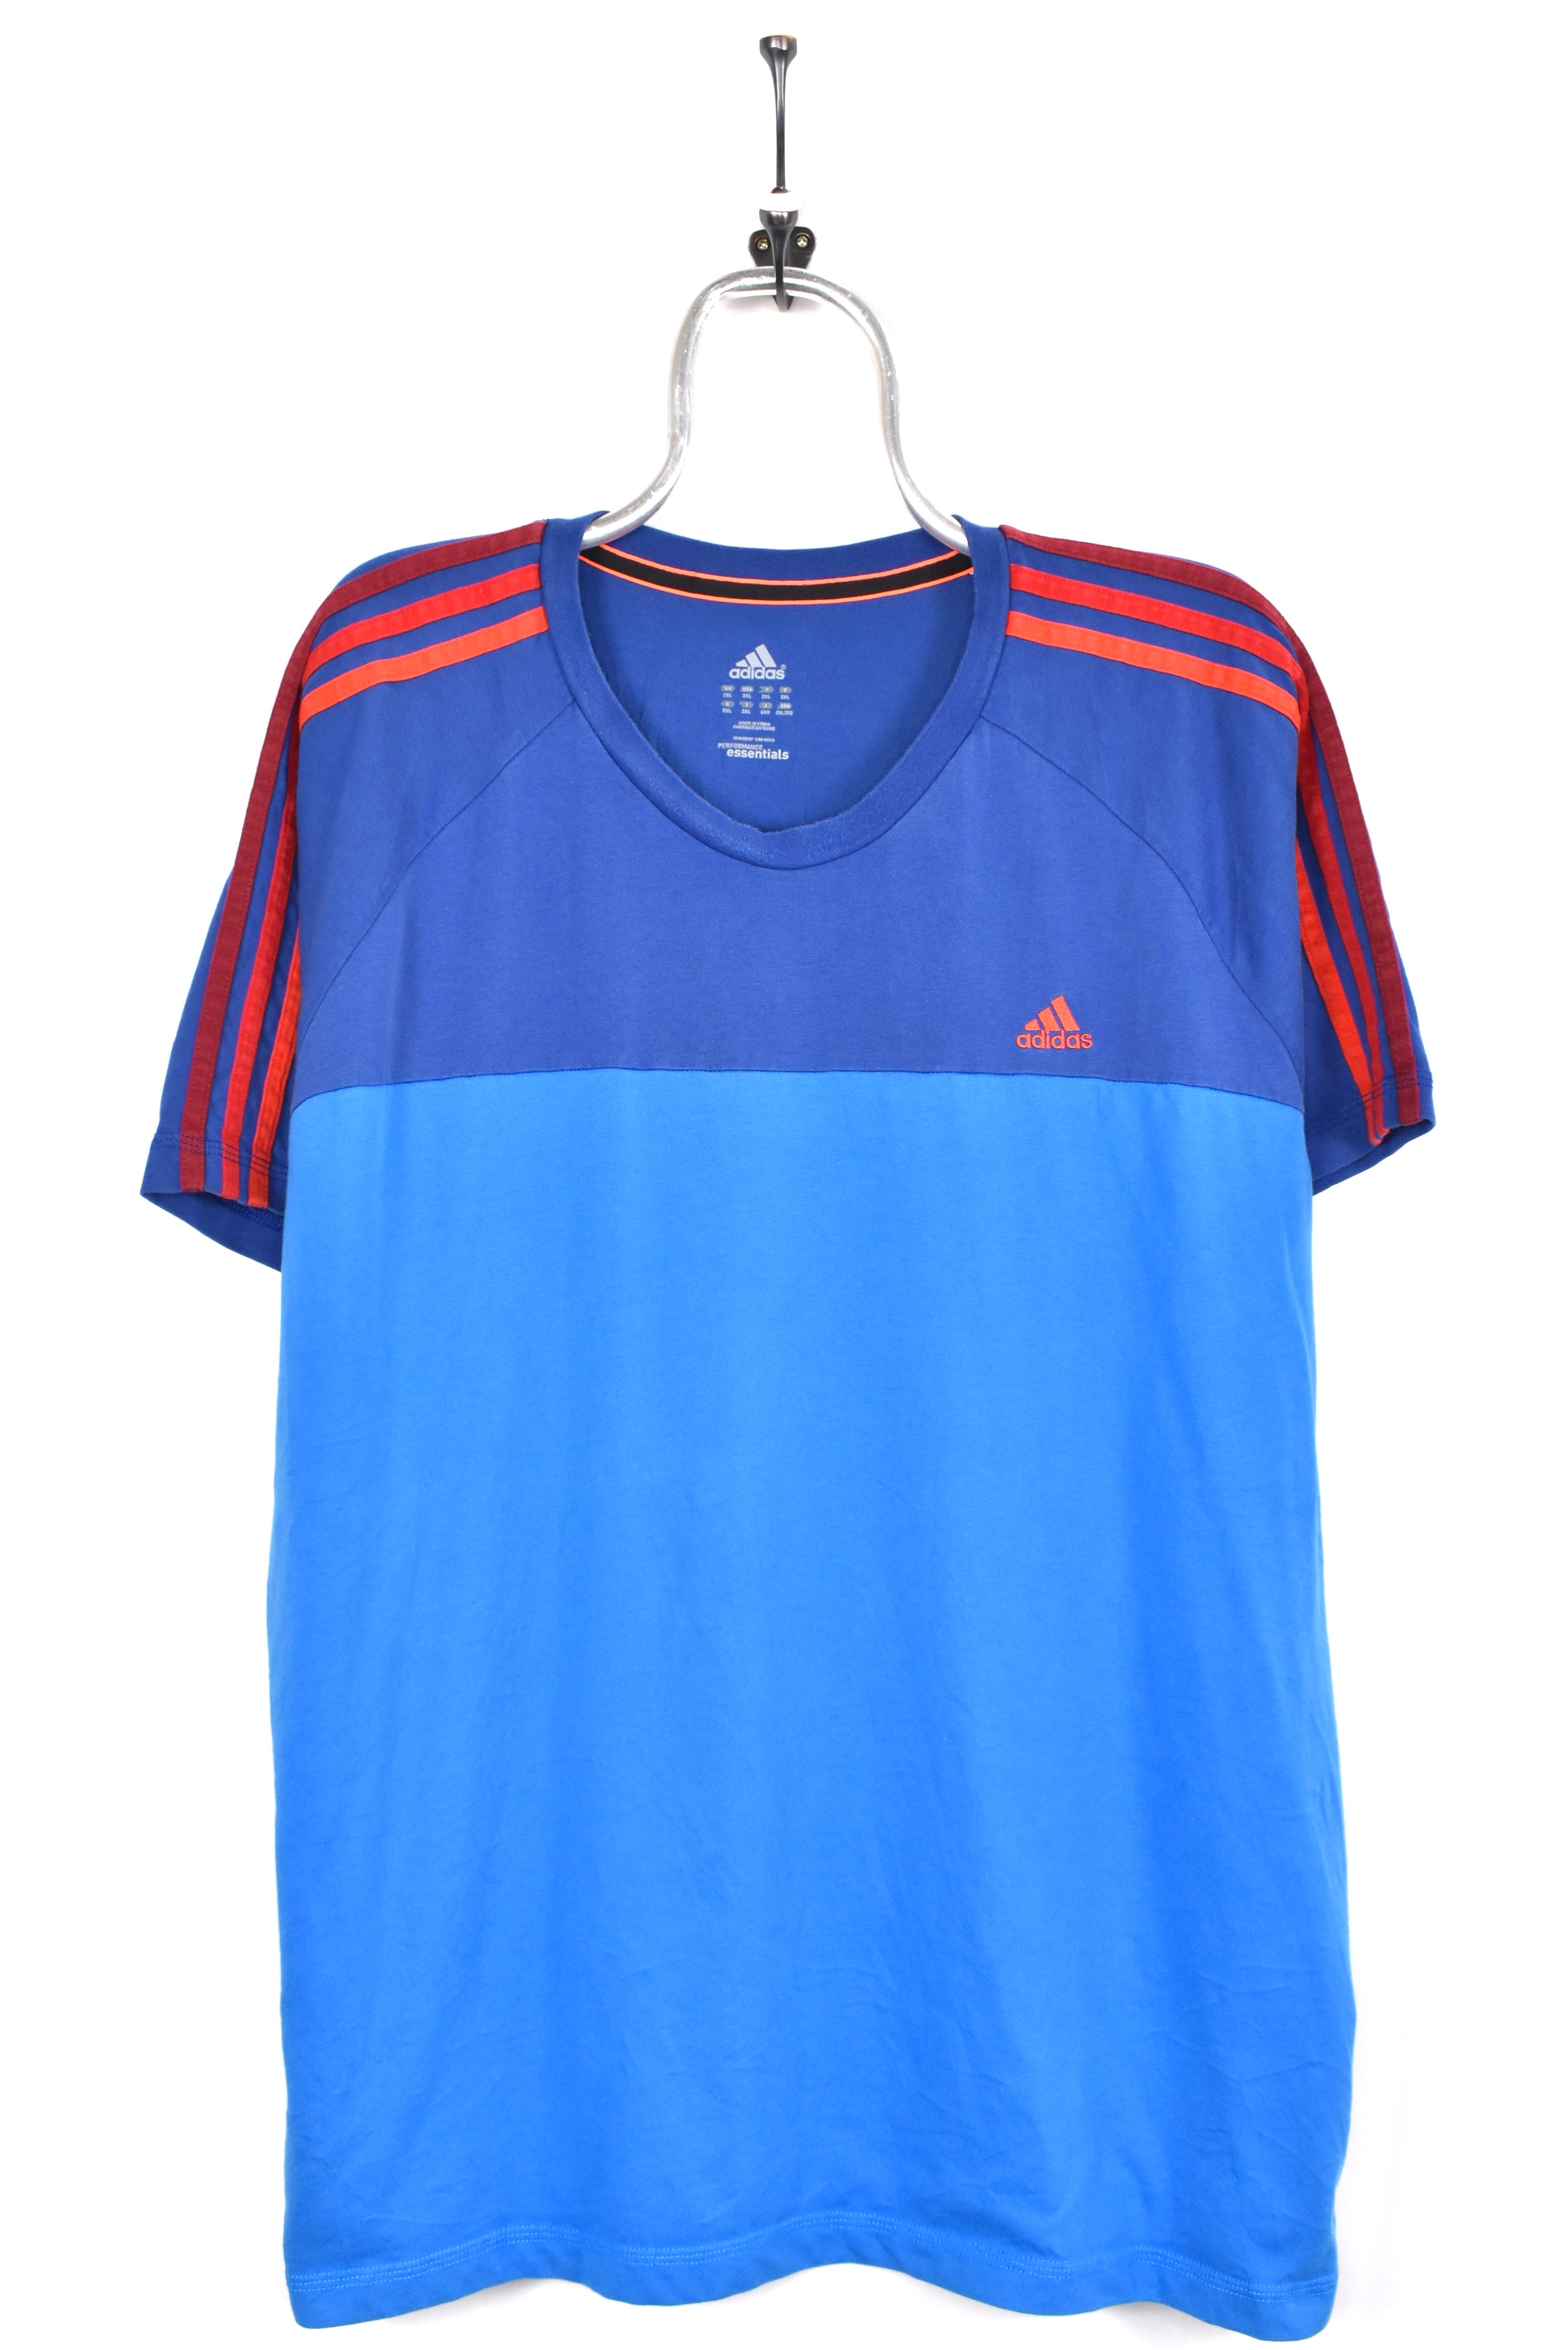 Modern Adidas shirt, blue embroidered tee - AU XXL ADIDAS